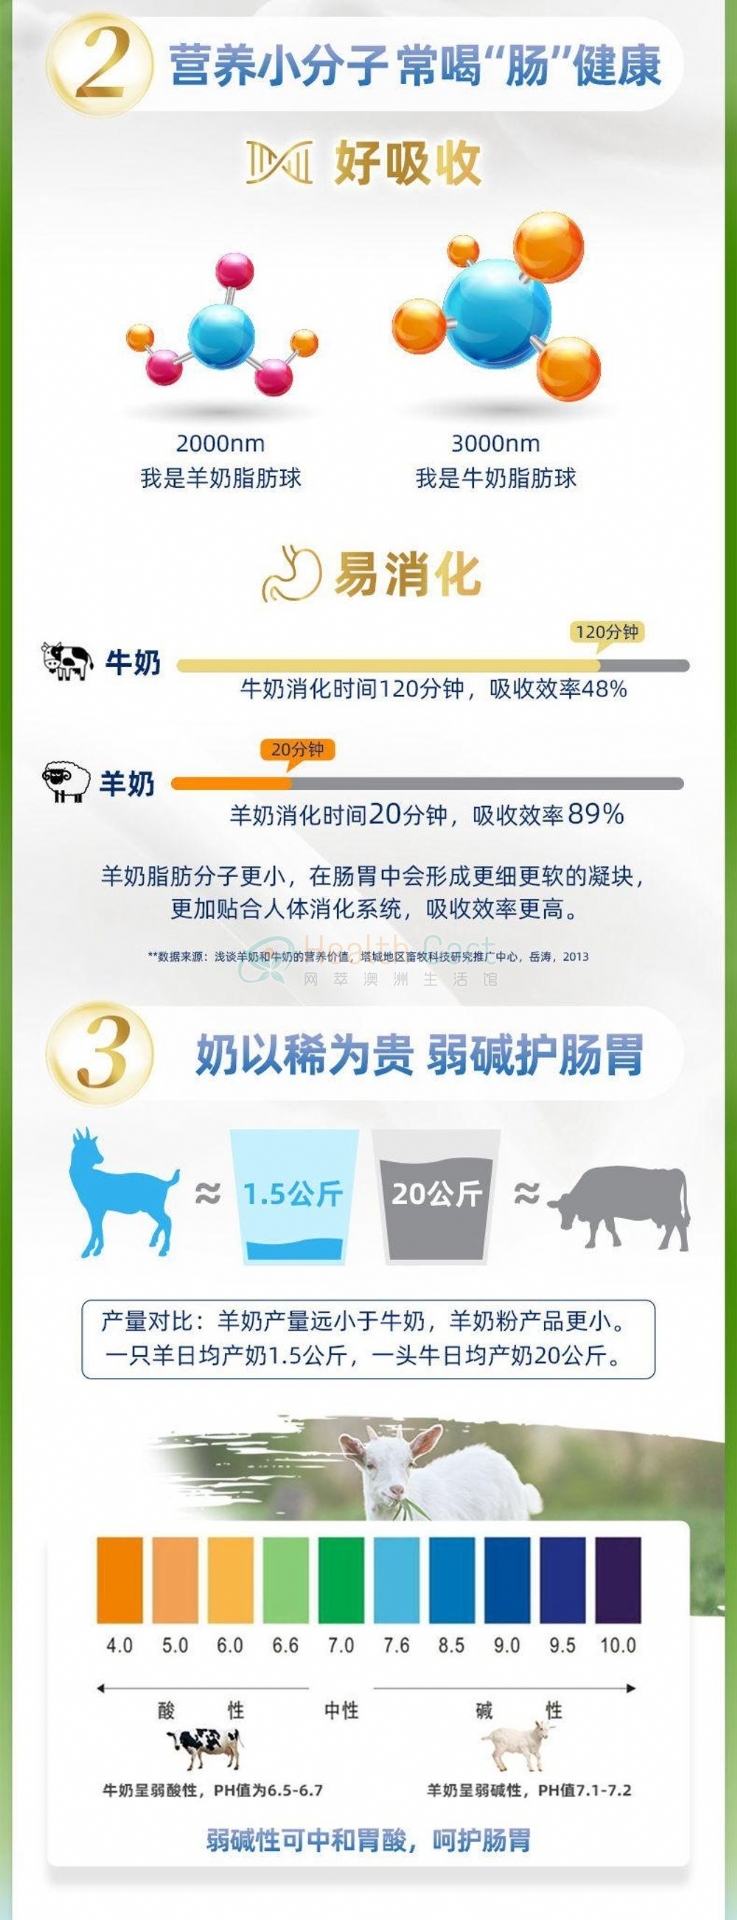 CapriLac成人羊奶粉（仅限发货到中国大陆，每个订单限购6包） - @caprilac goat milk powder 1kgmaximum 6 packs per order - 12 - Healthcart 网萃澳洲生活馆